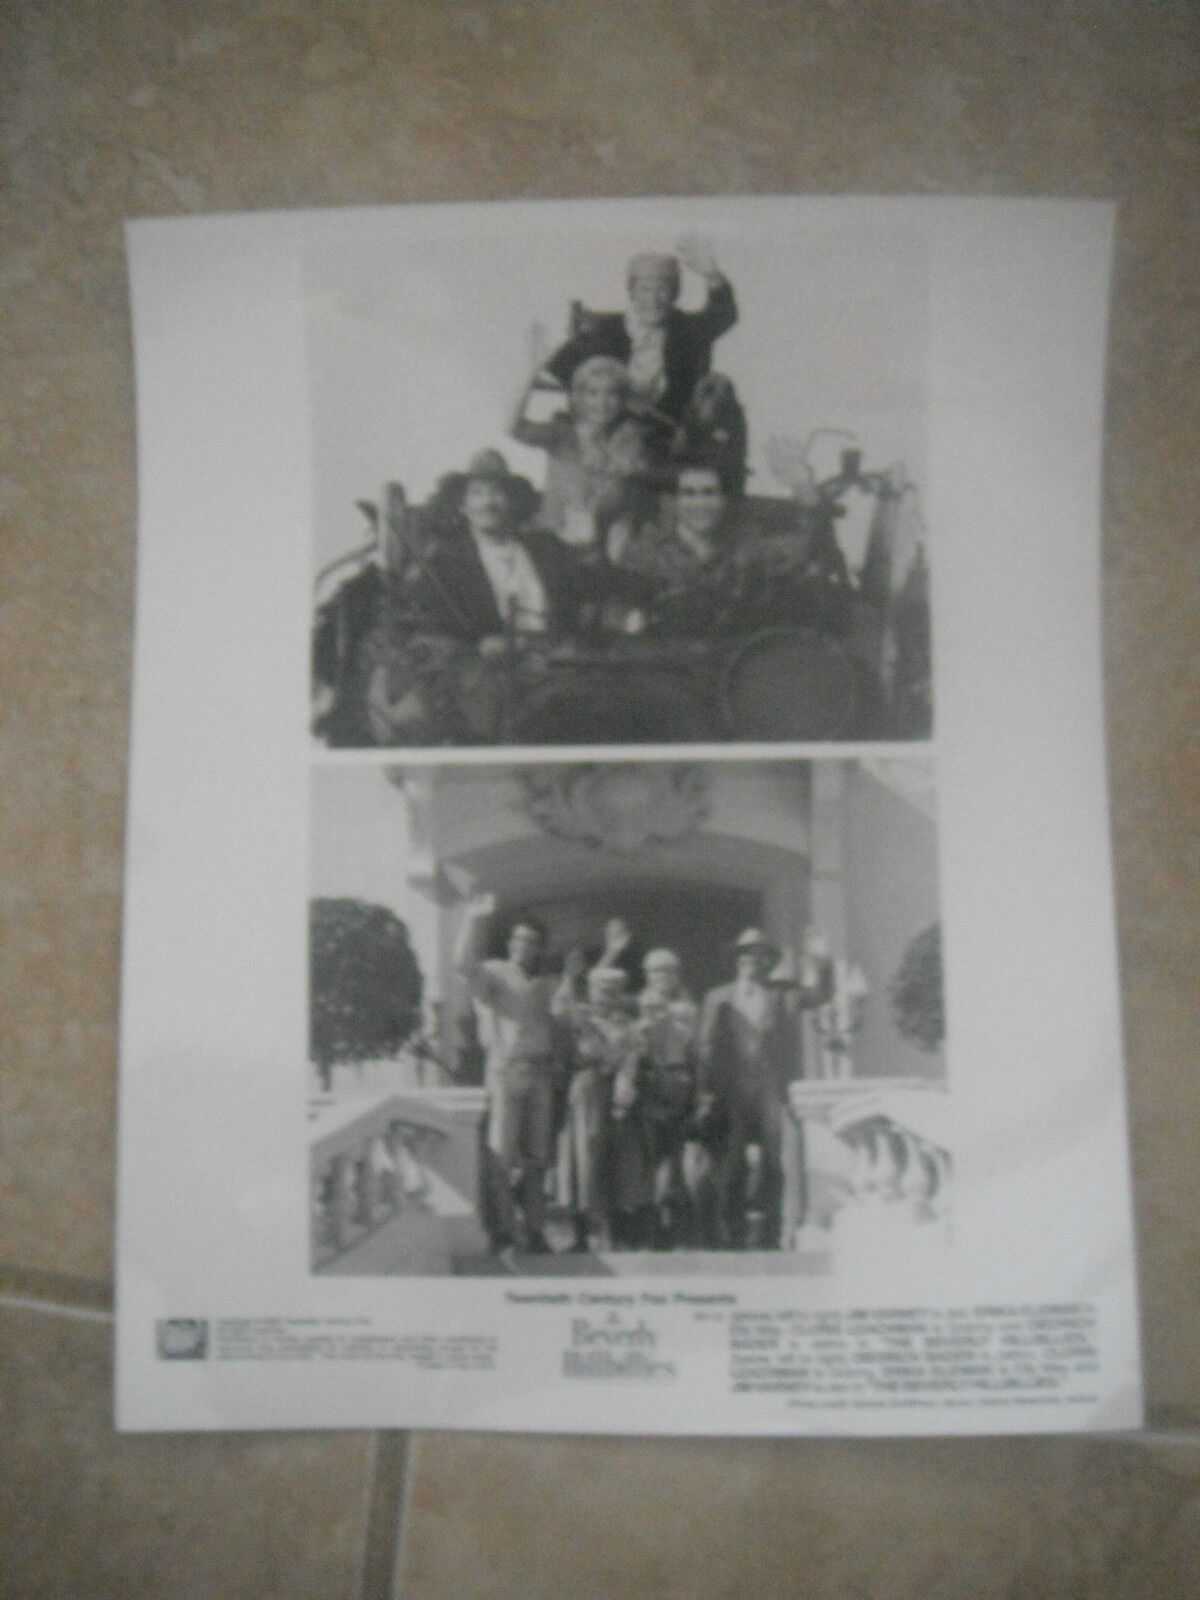 Beverly Hillbillies Leachman Varney Eleniak Bade B&W 8x10 Promo Photo Poster painting Lobby Card